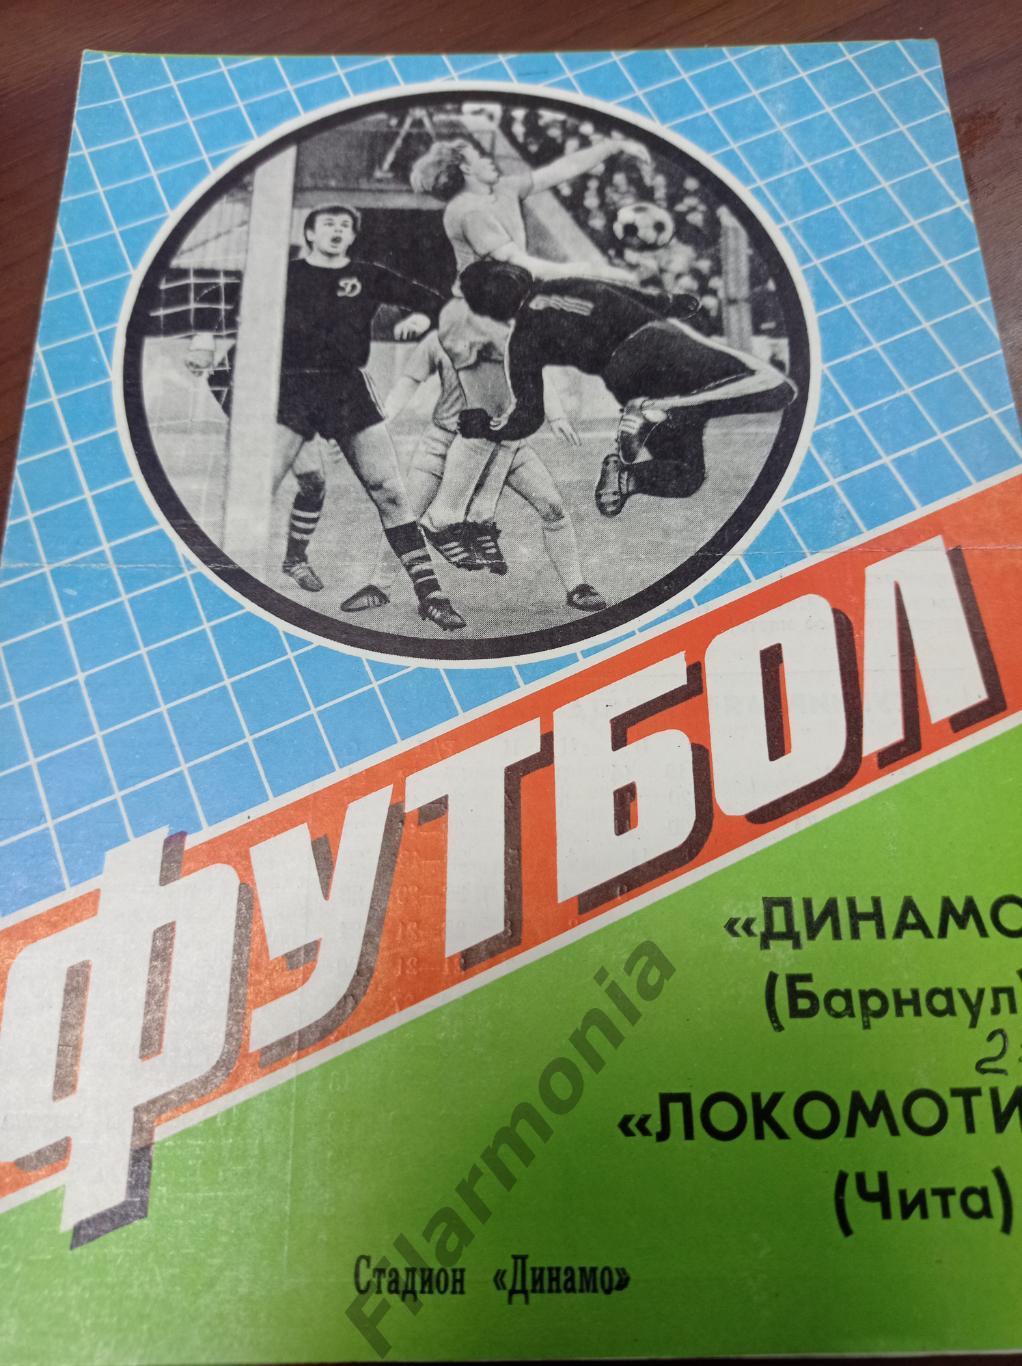 1984 Динамо Барнаул - Локомотив Чита